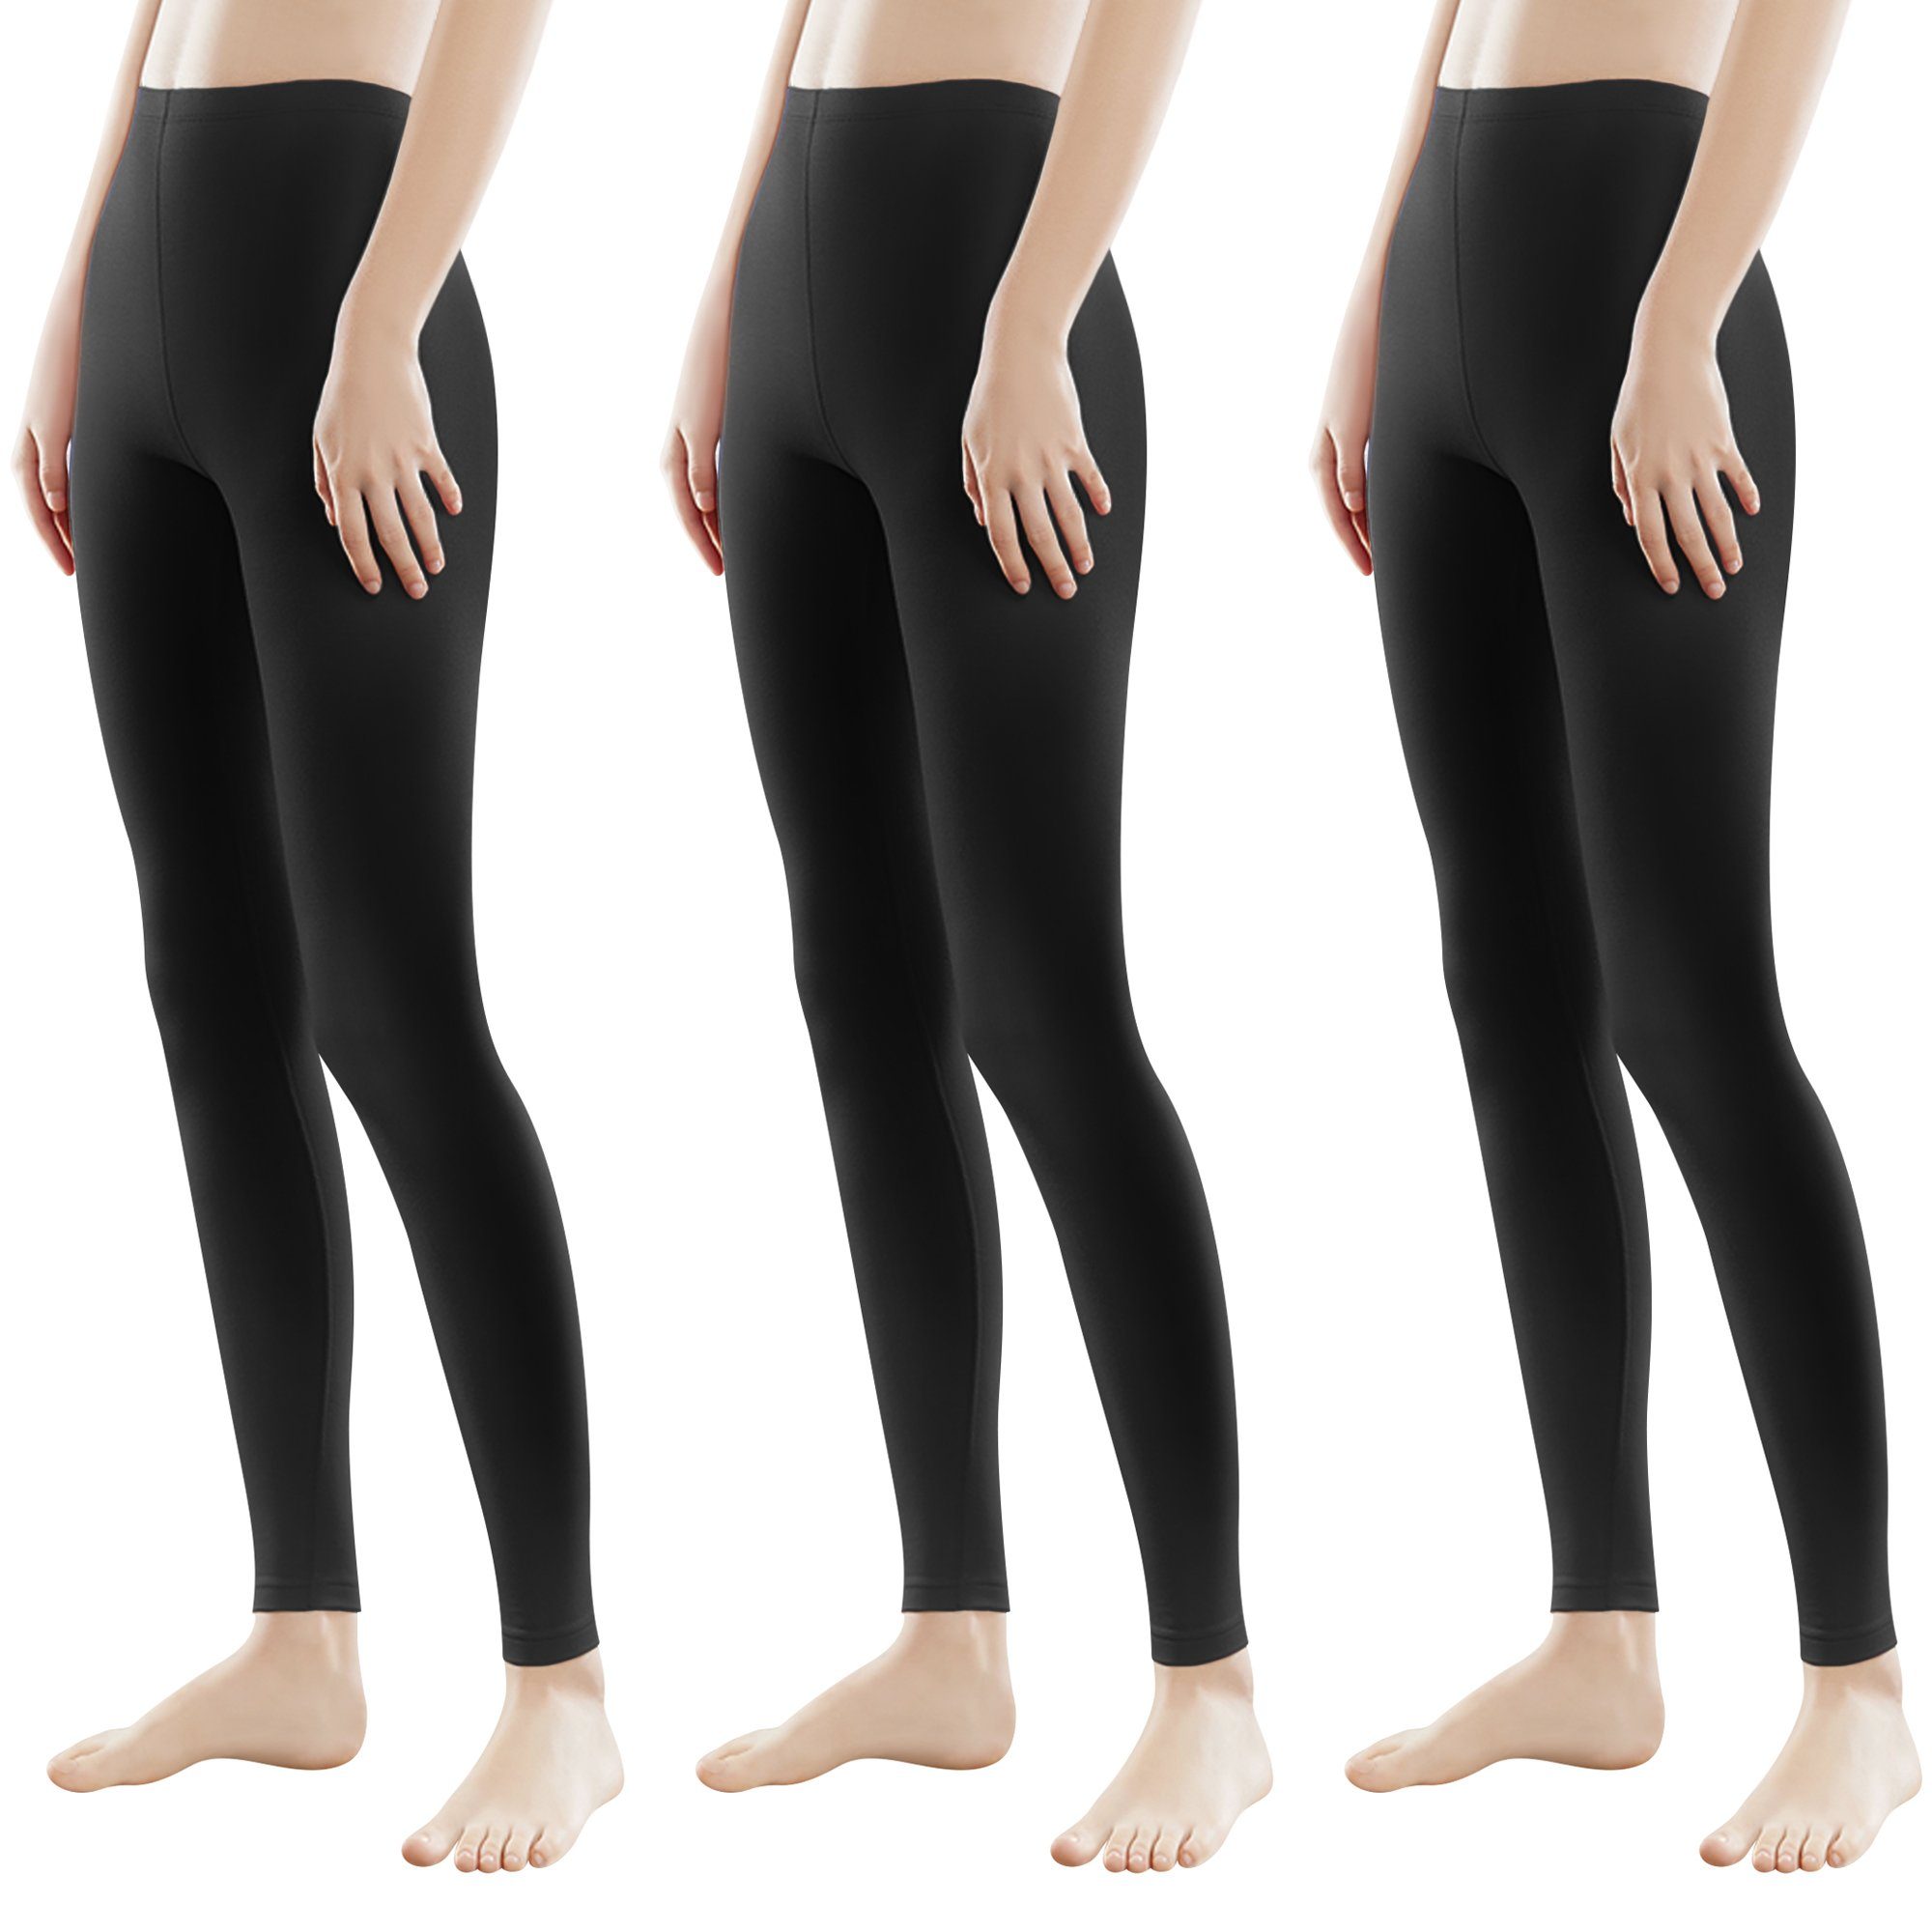 Libella Leggings 4108-3er (3er-Pack, 3er-Pack) Hohe Taille Slim Fit Fitnesshose aus Baumwolle